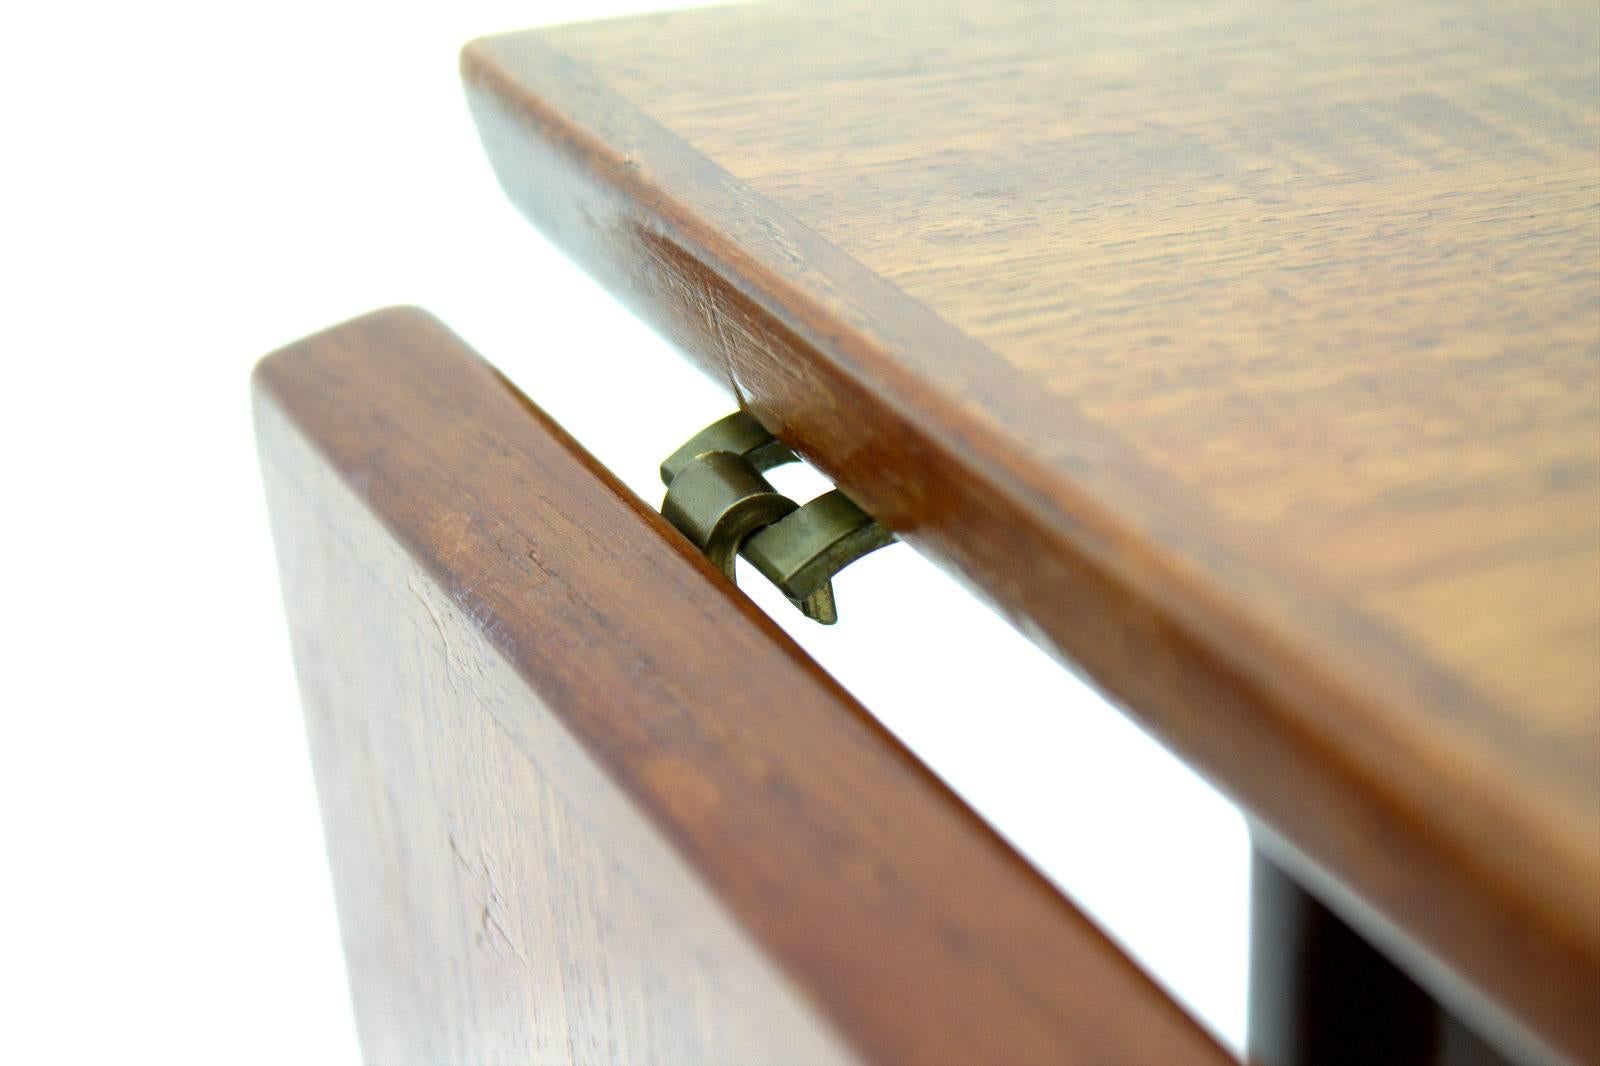 Danish teak wood drop leaf table, 1960s.
Very good condition.

Worldwide shipping